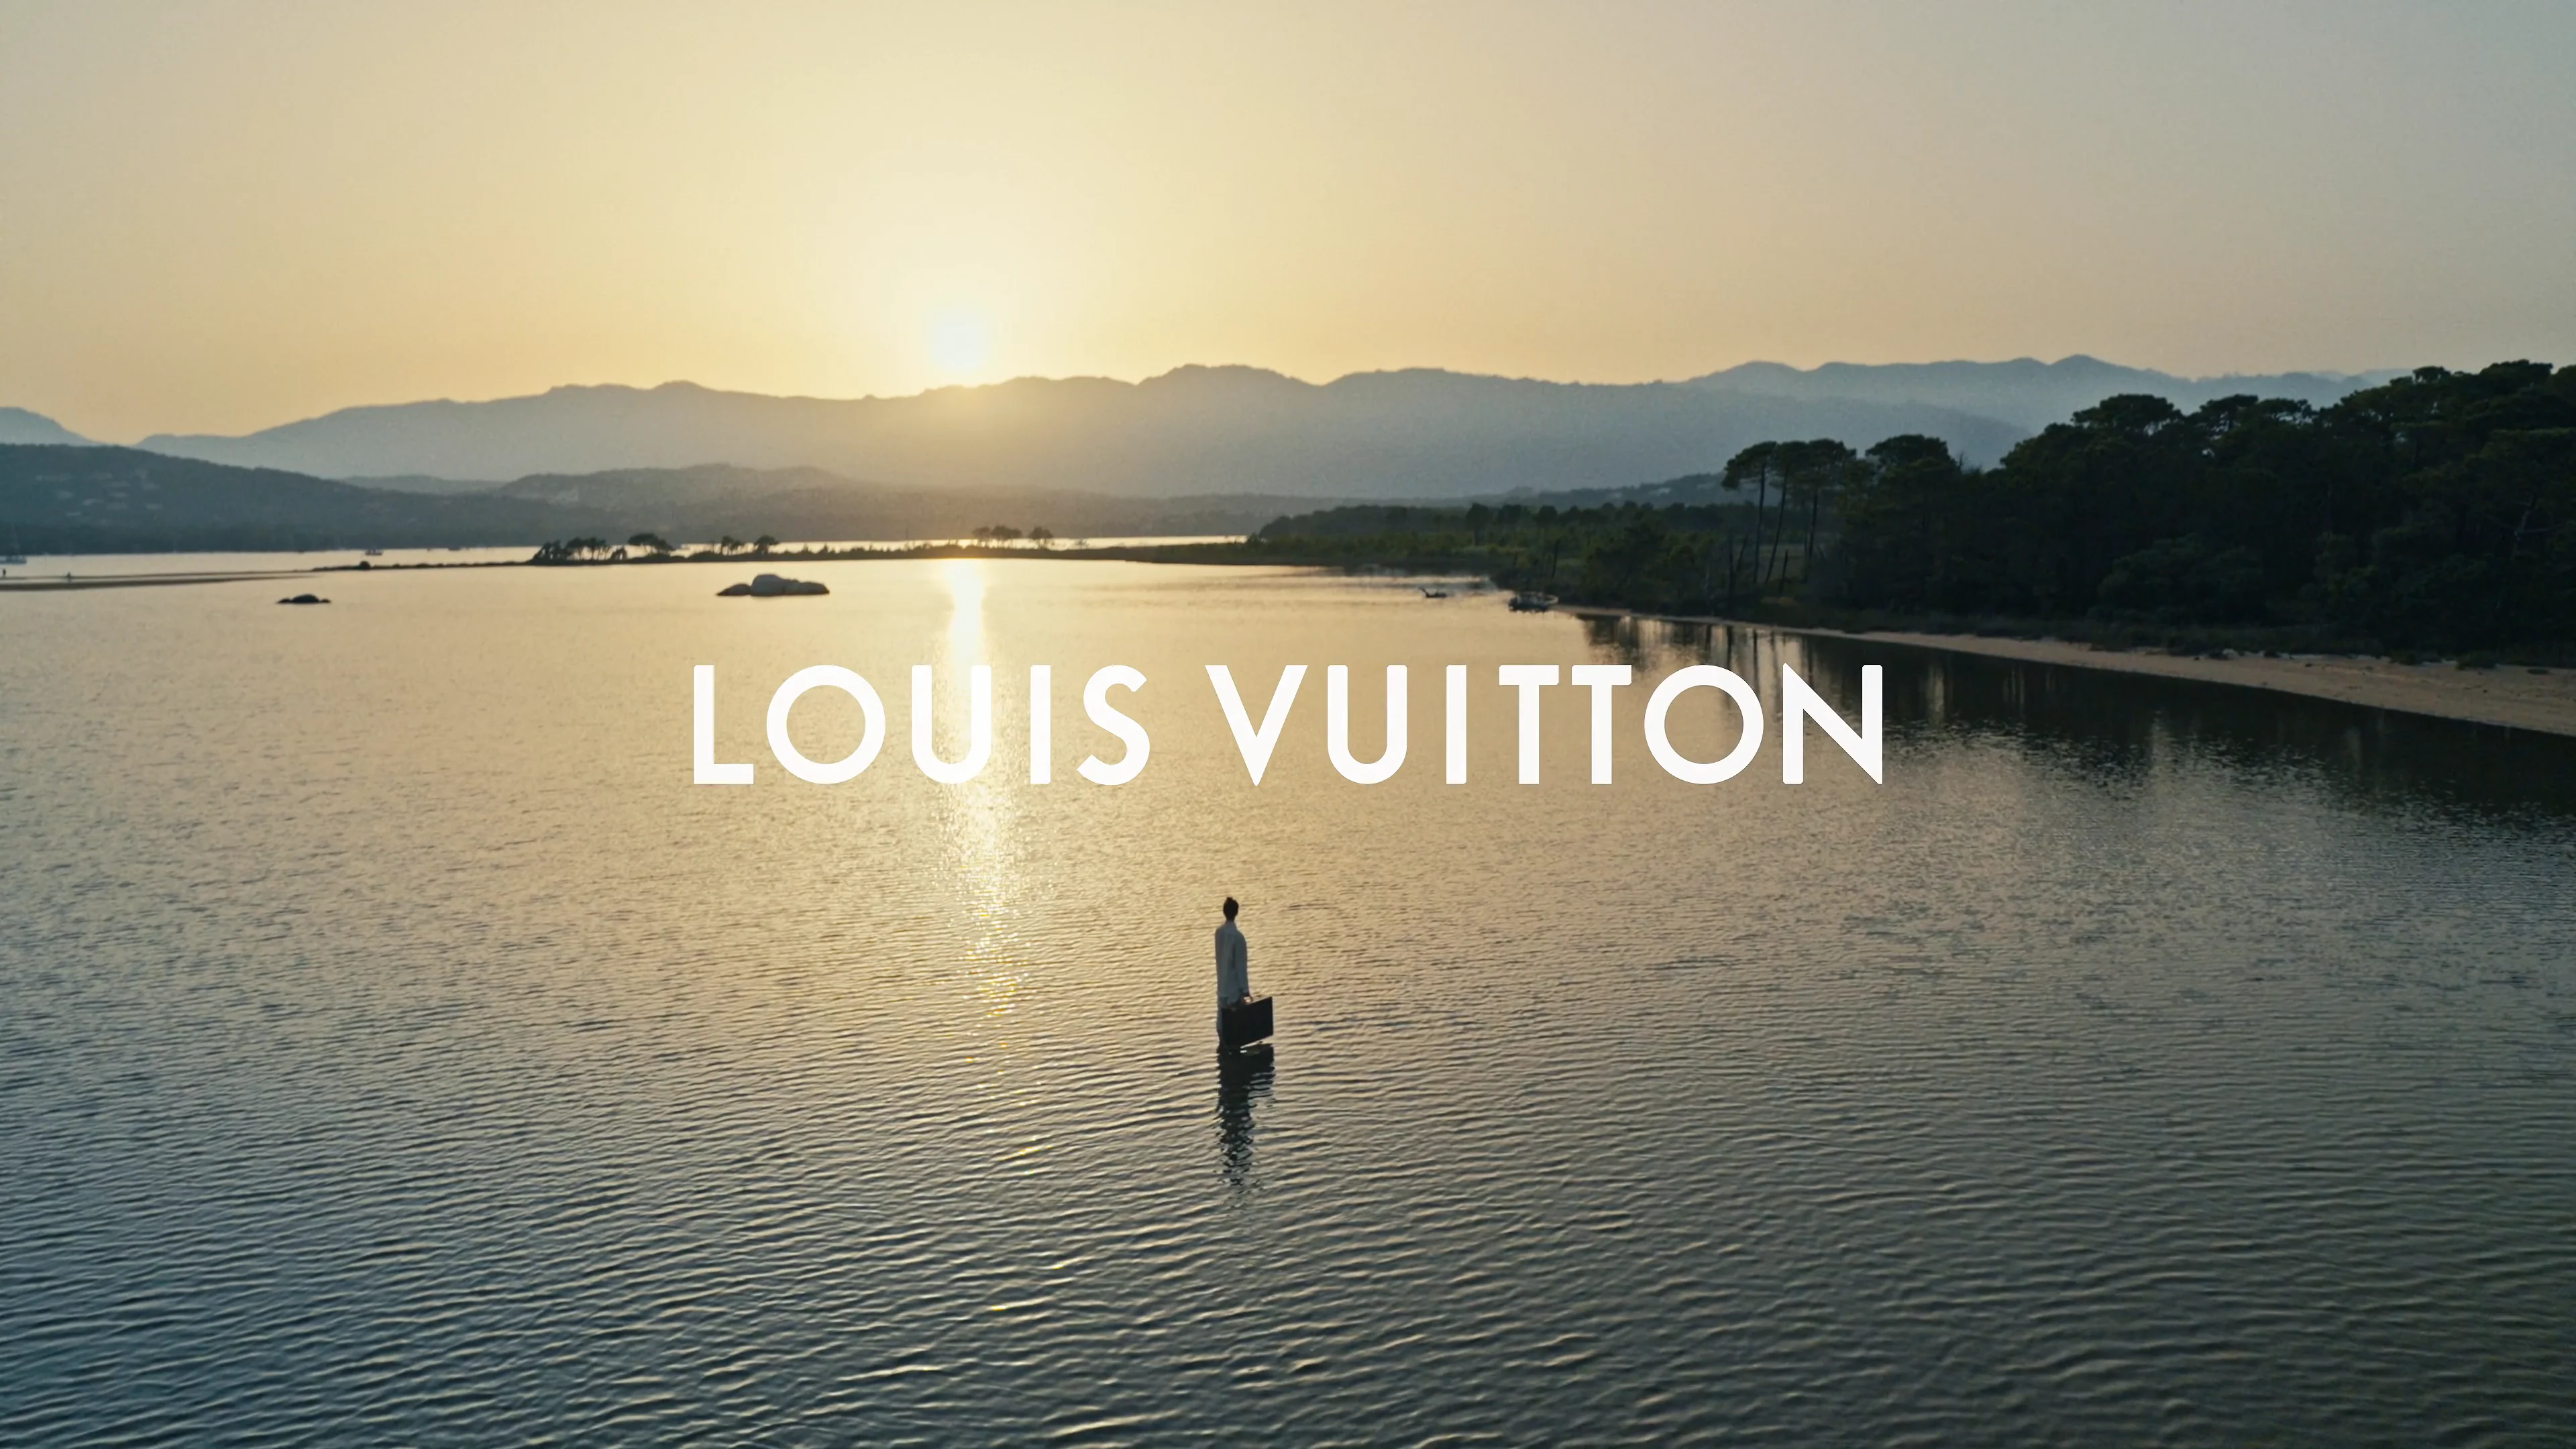 Louis Vuitton Our Journey Connected